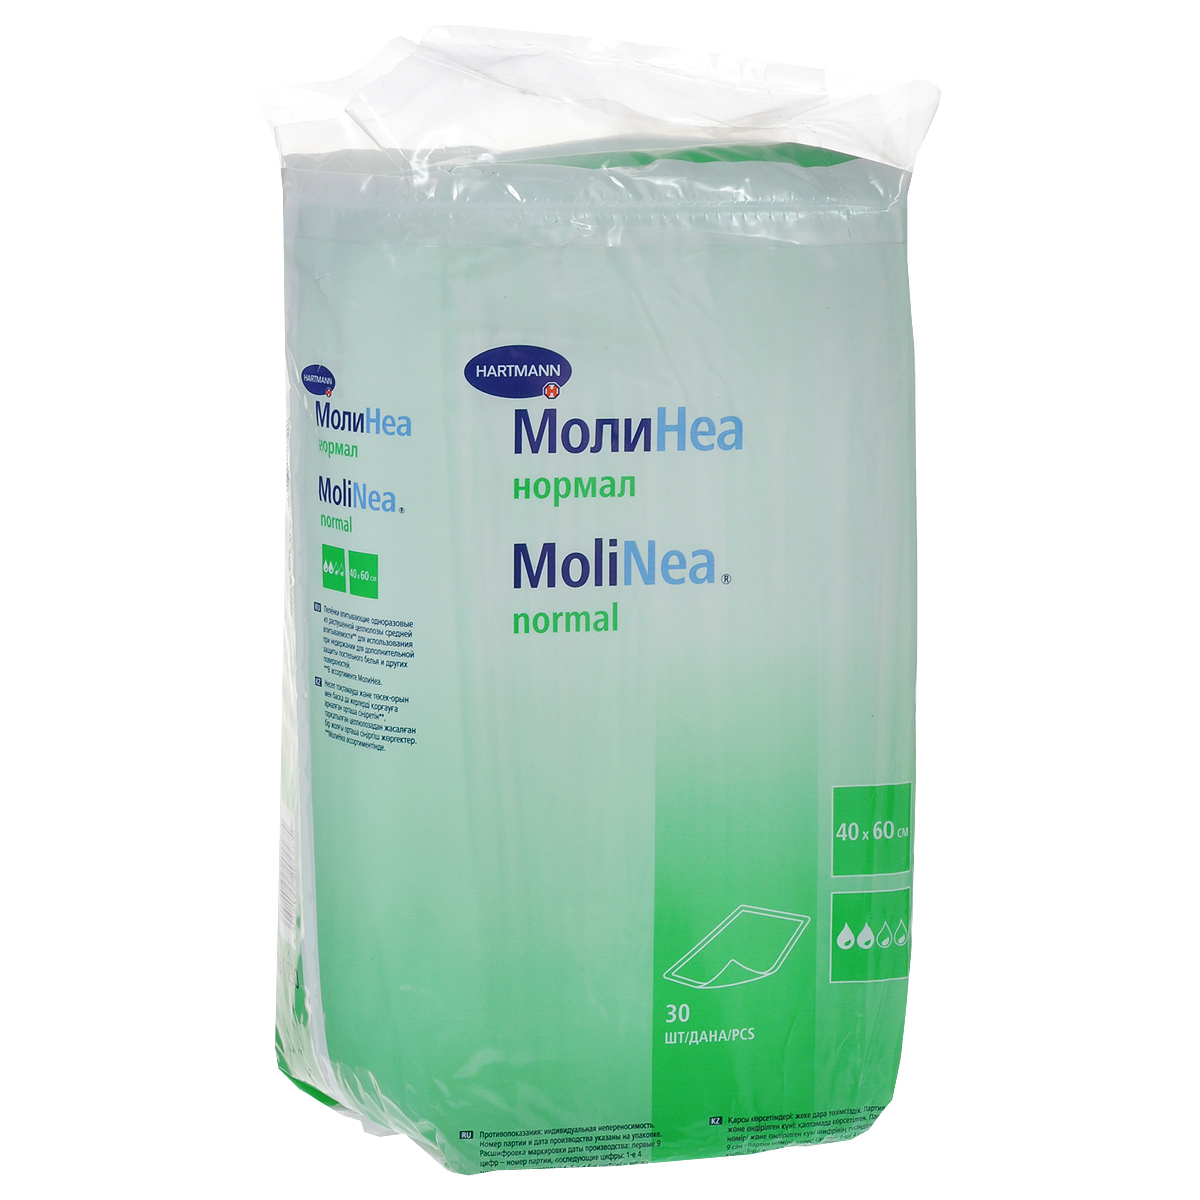    "Molinea () Normal", 40   60 , 30 